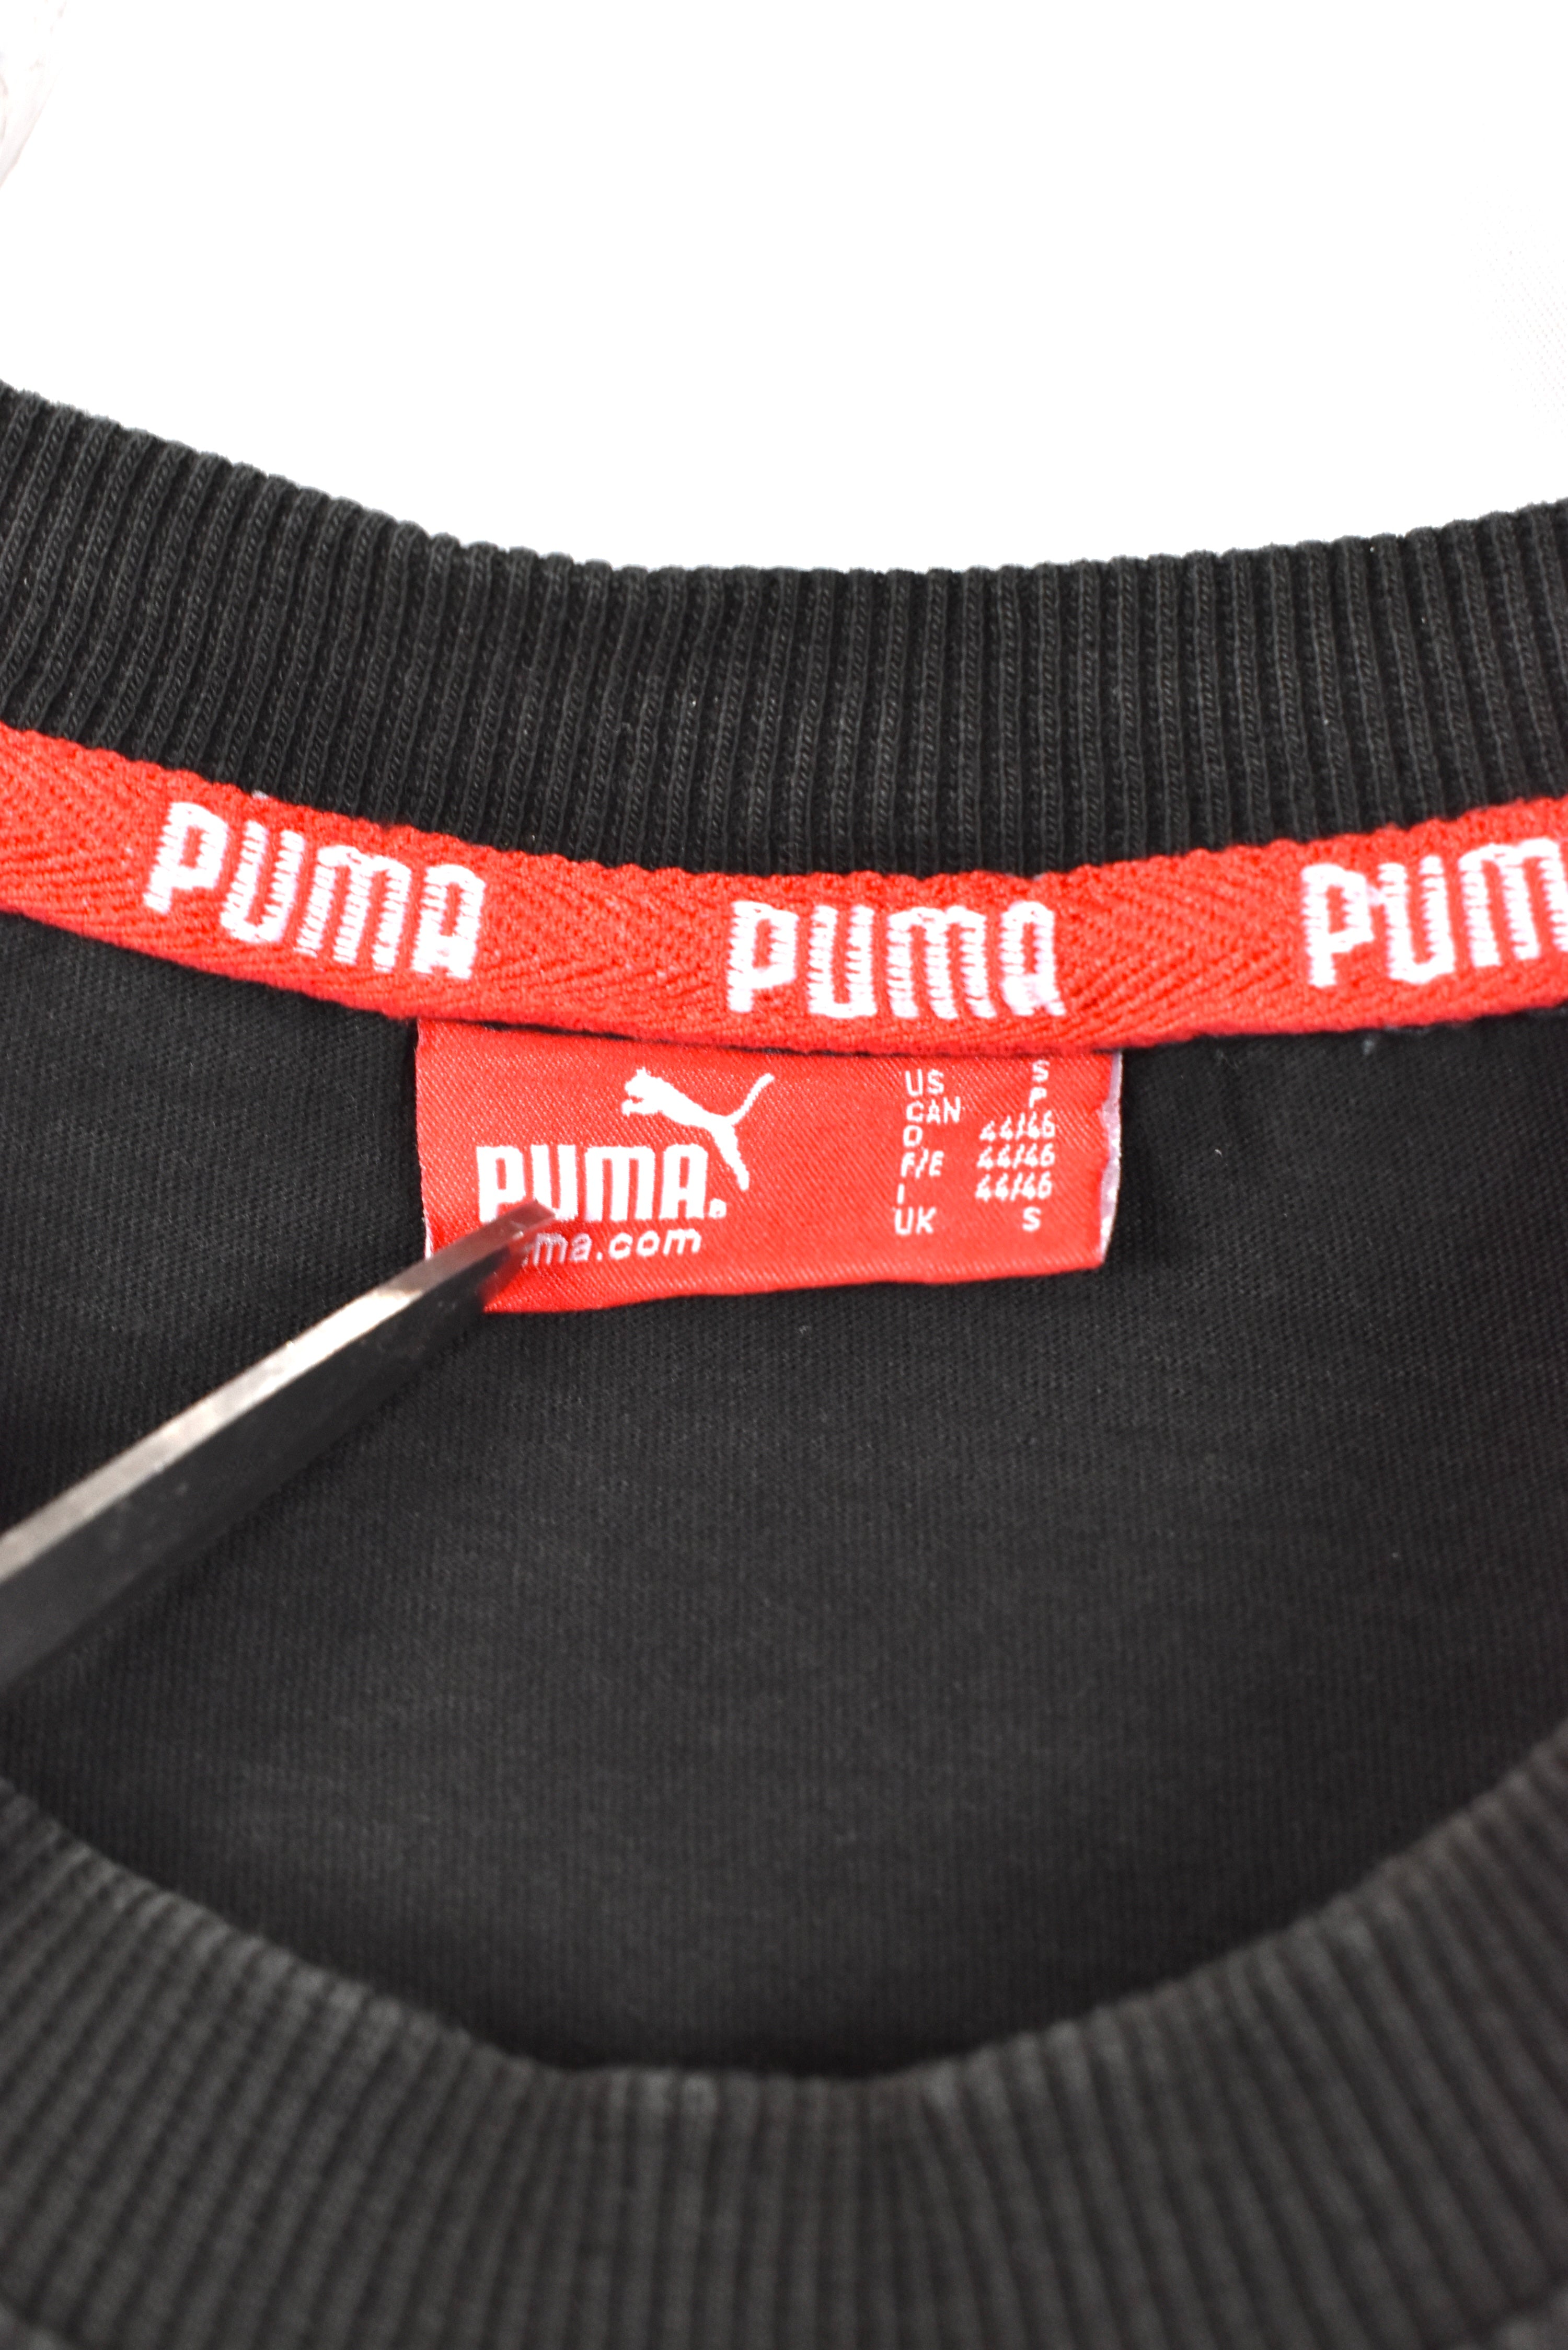 Women's modern Puma shirt, black graphic tee - AU S PUMA